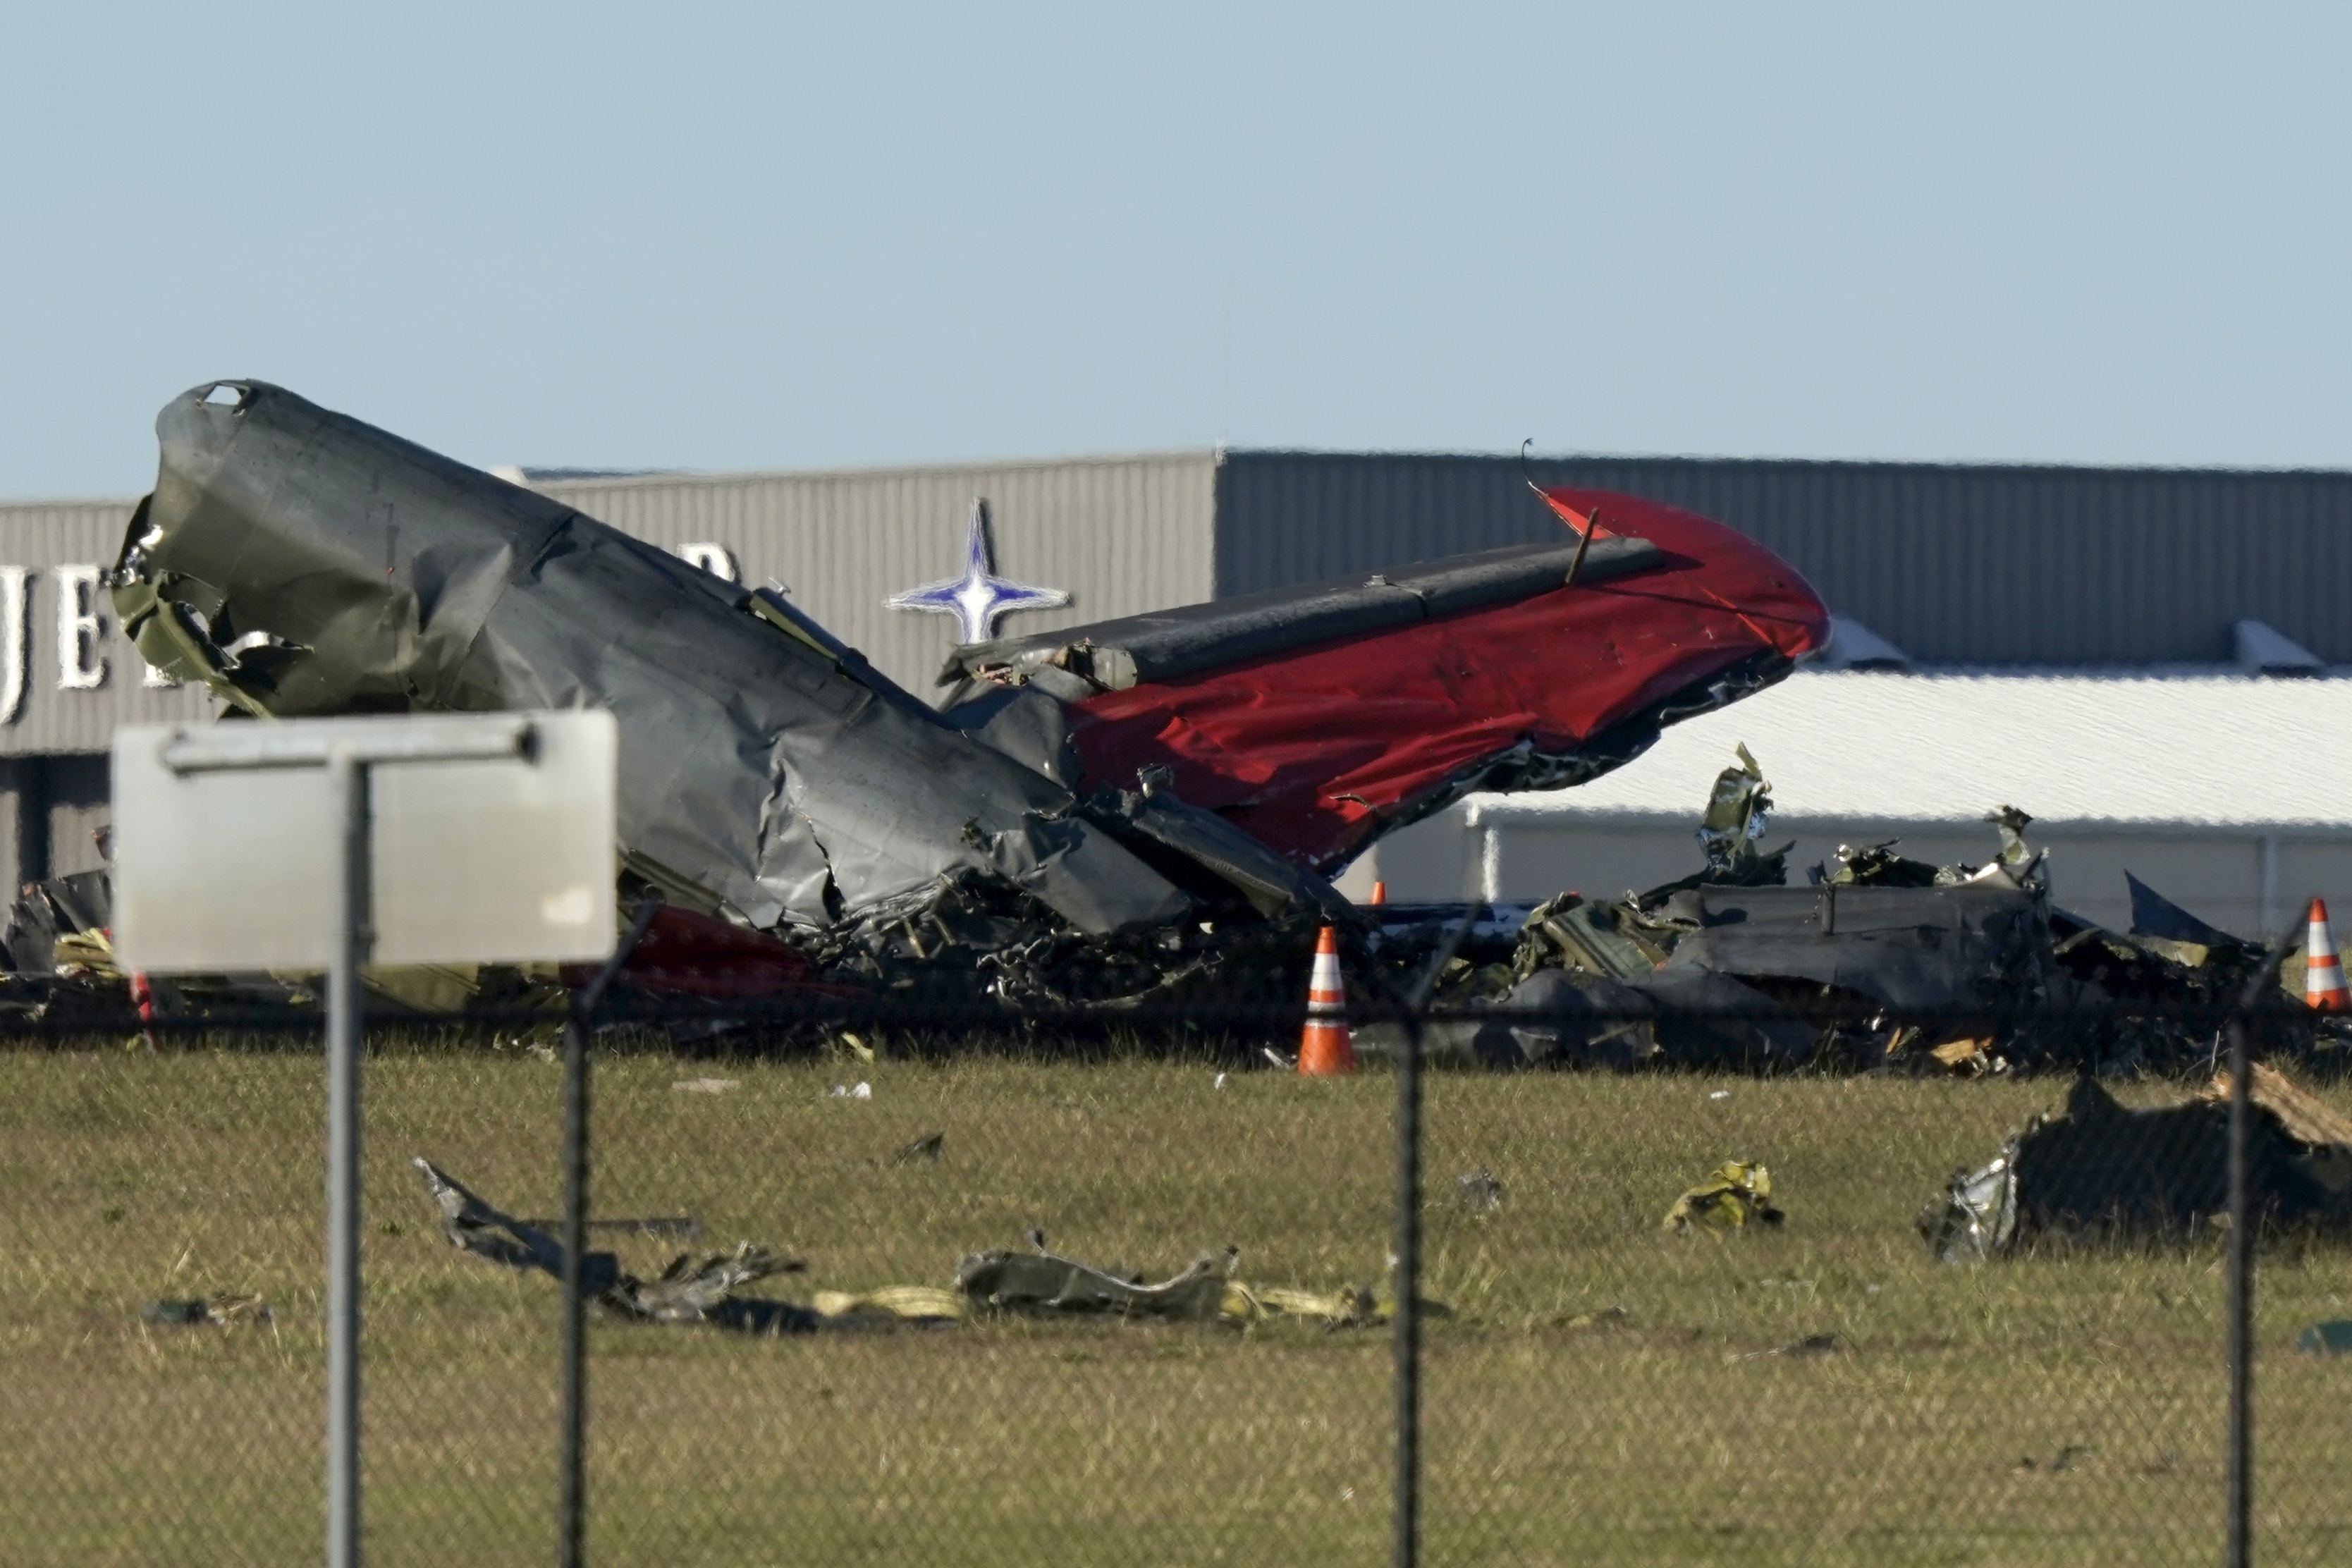 The #breakingbad TV Show Plane Crash ✈️